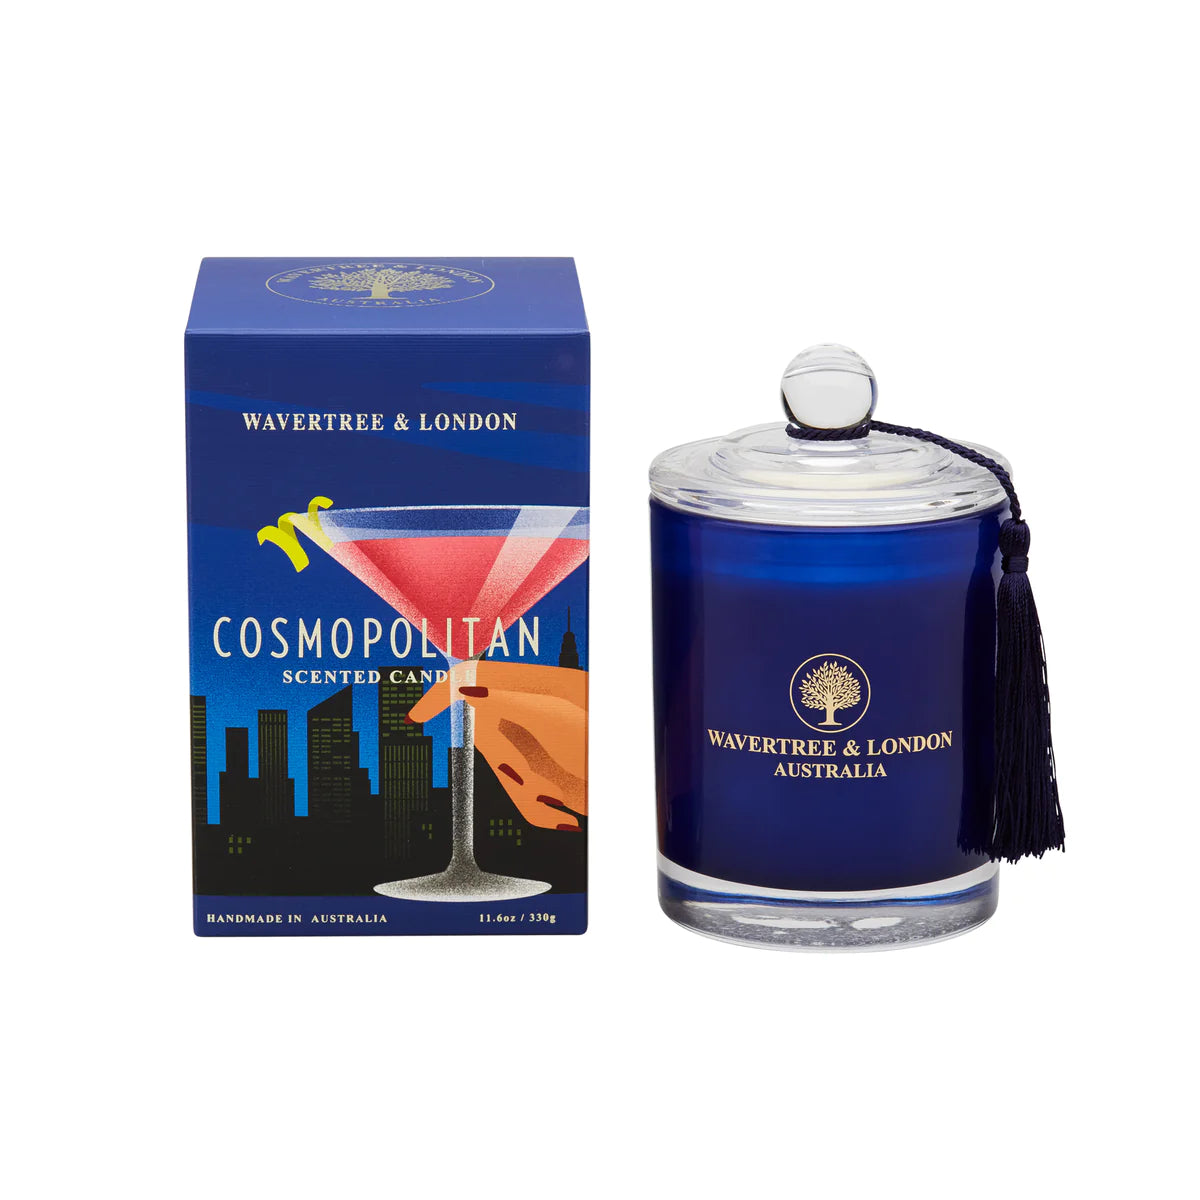 Wavertree & London Cosmopolitan Candle